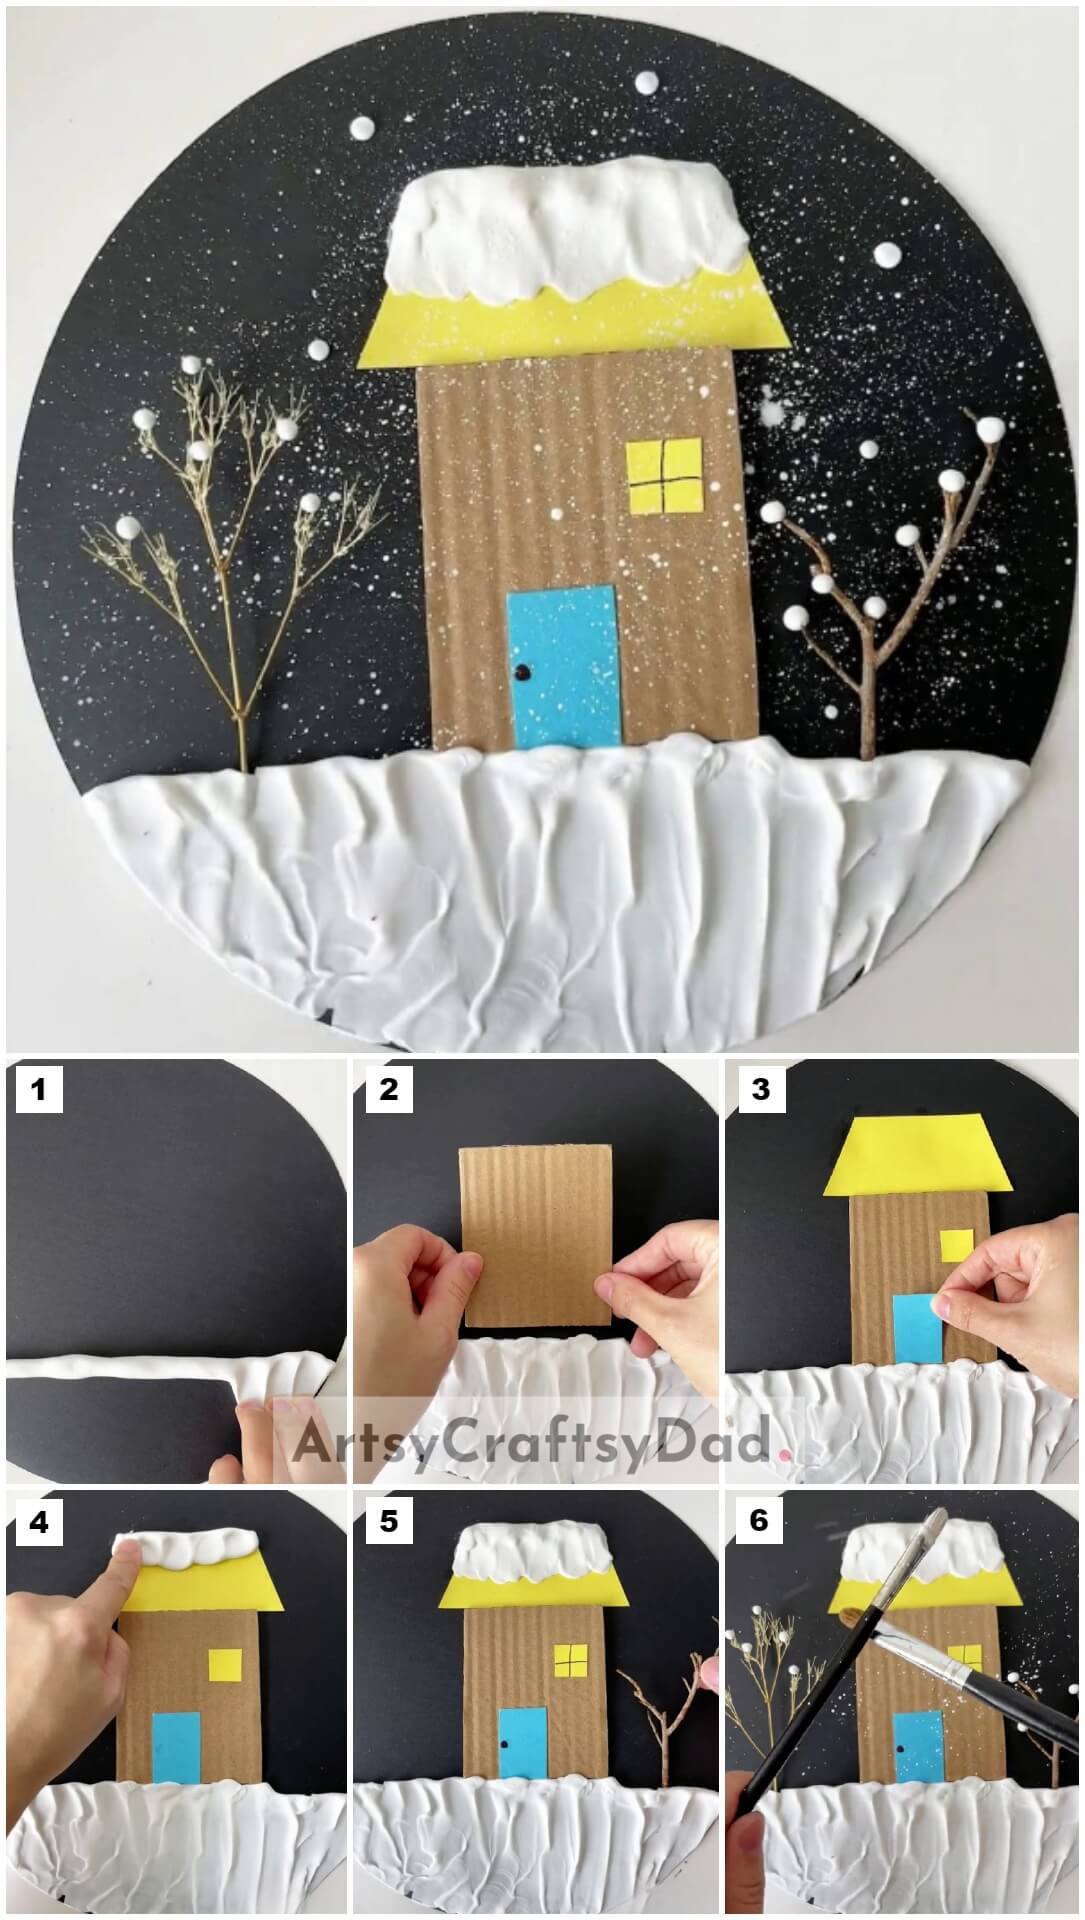 Cardboard & Paper Winter Hut Craft Tutorial For Kids